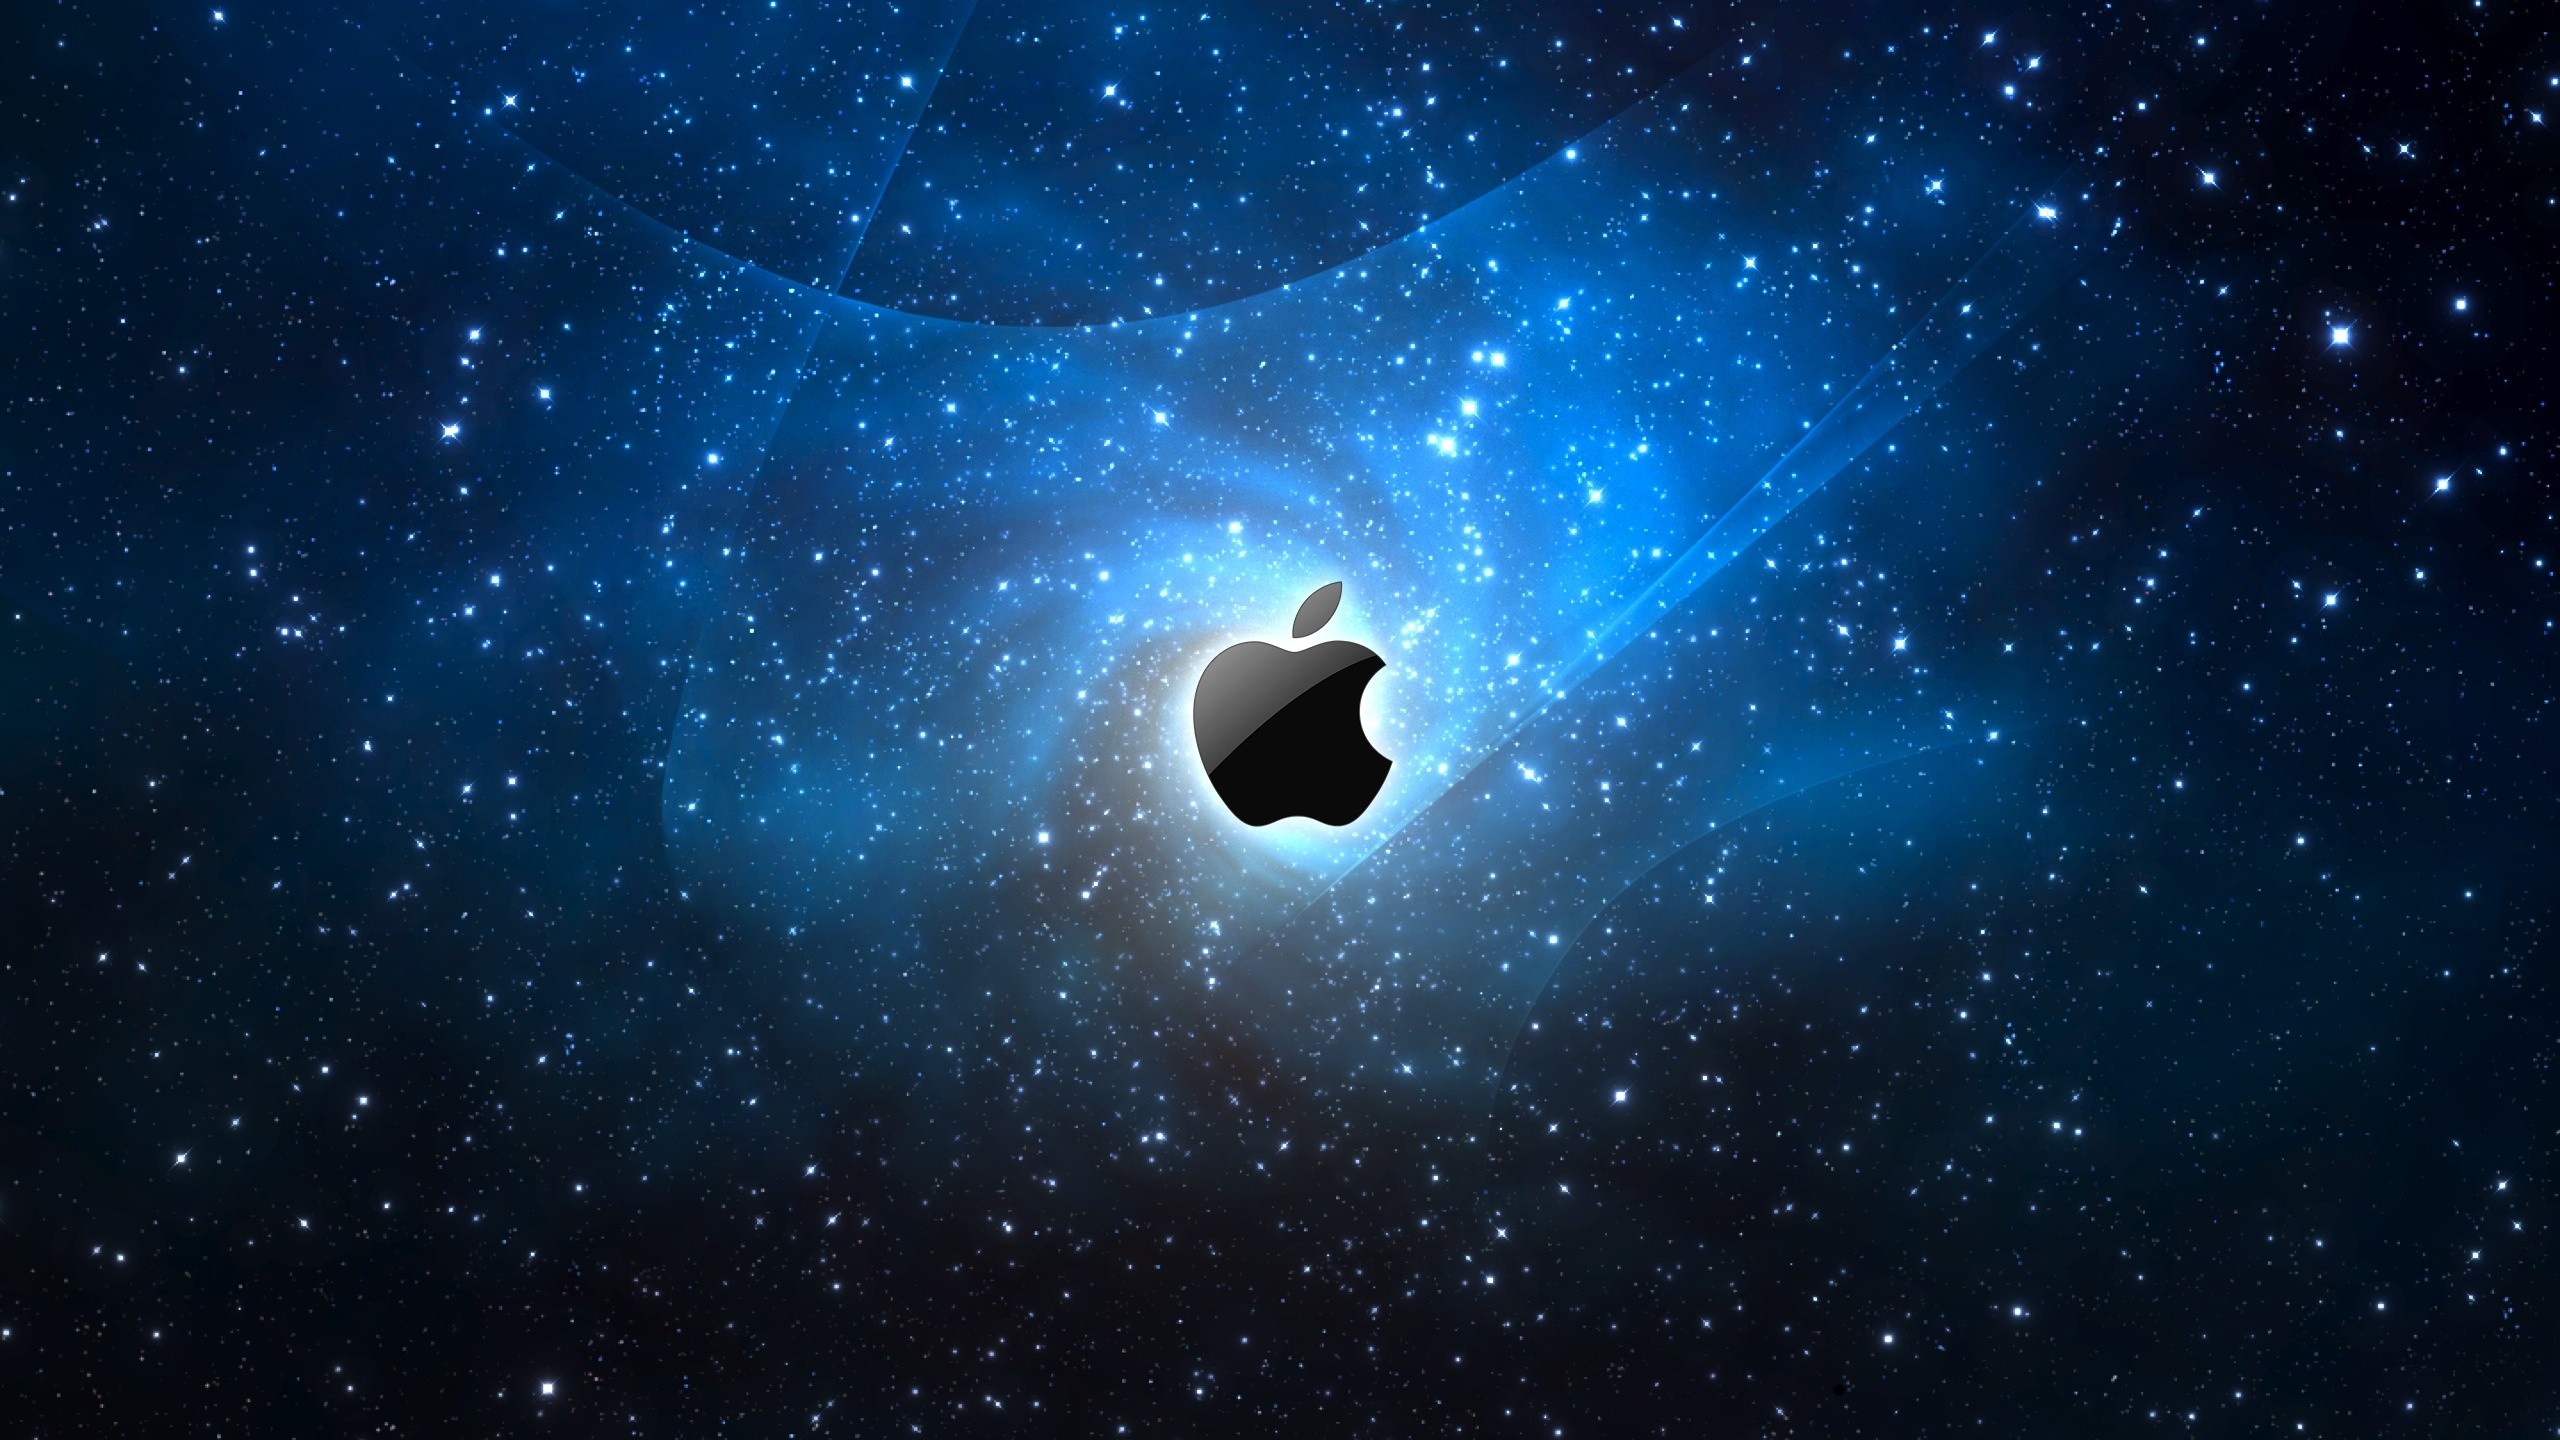 Space Apple logo desktop PC and Mac wallpaper